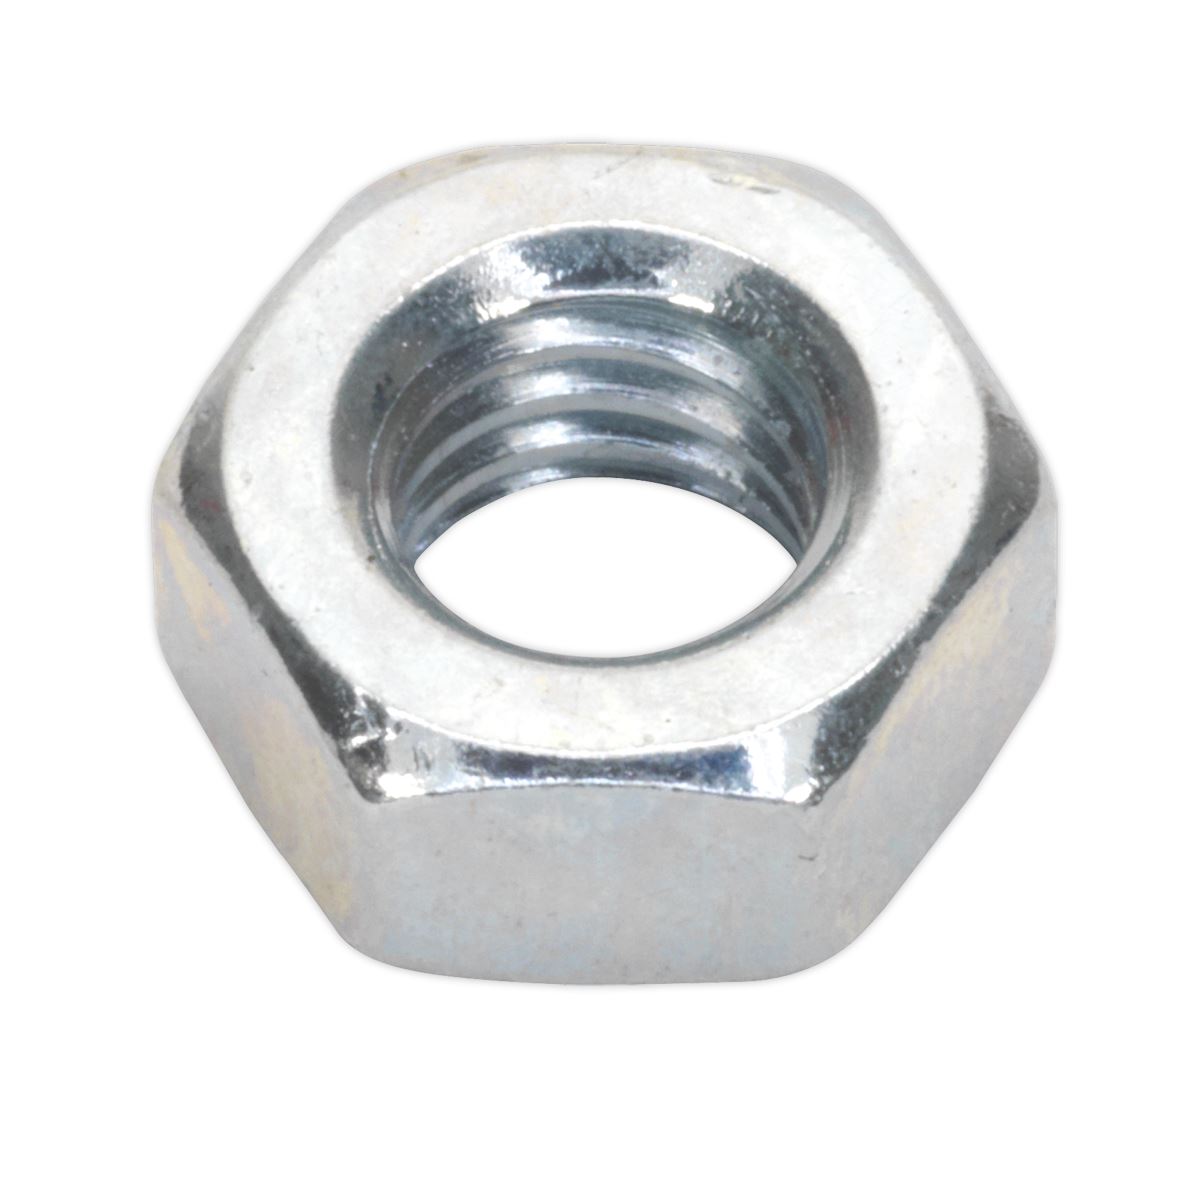 Sealey Steel Nut DIN 934 - M6 - Pack of 100